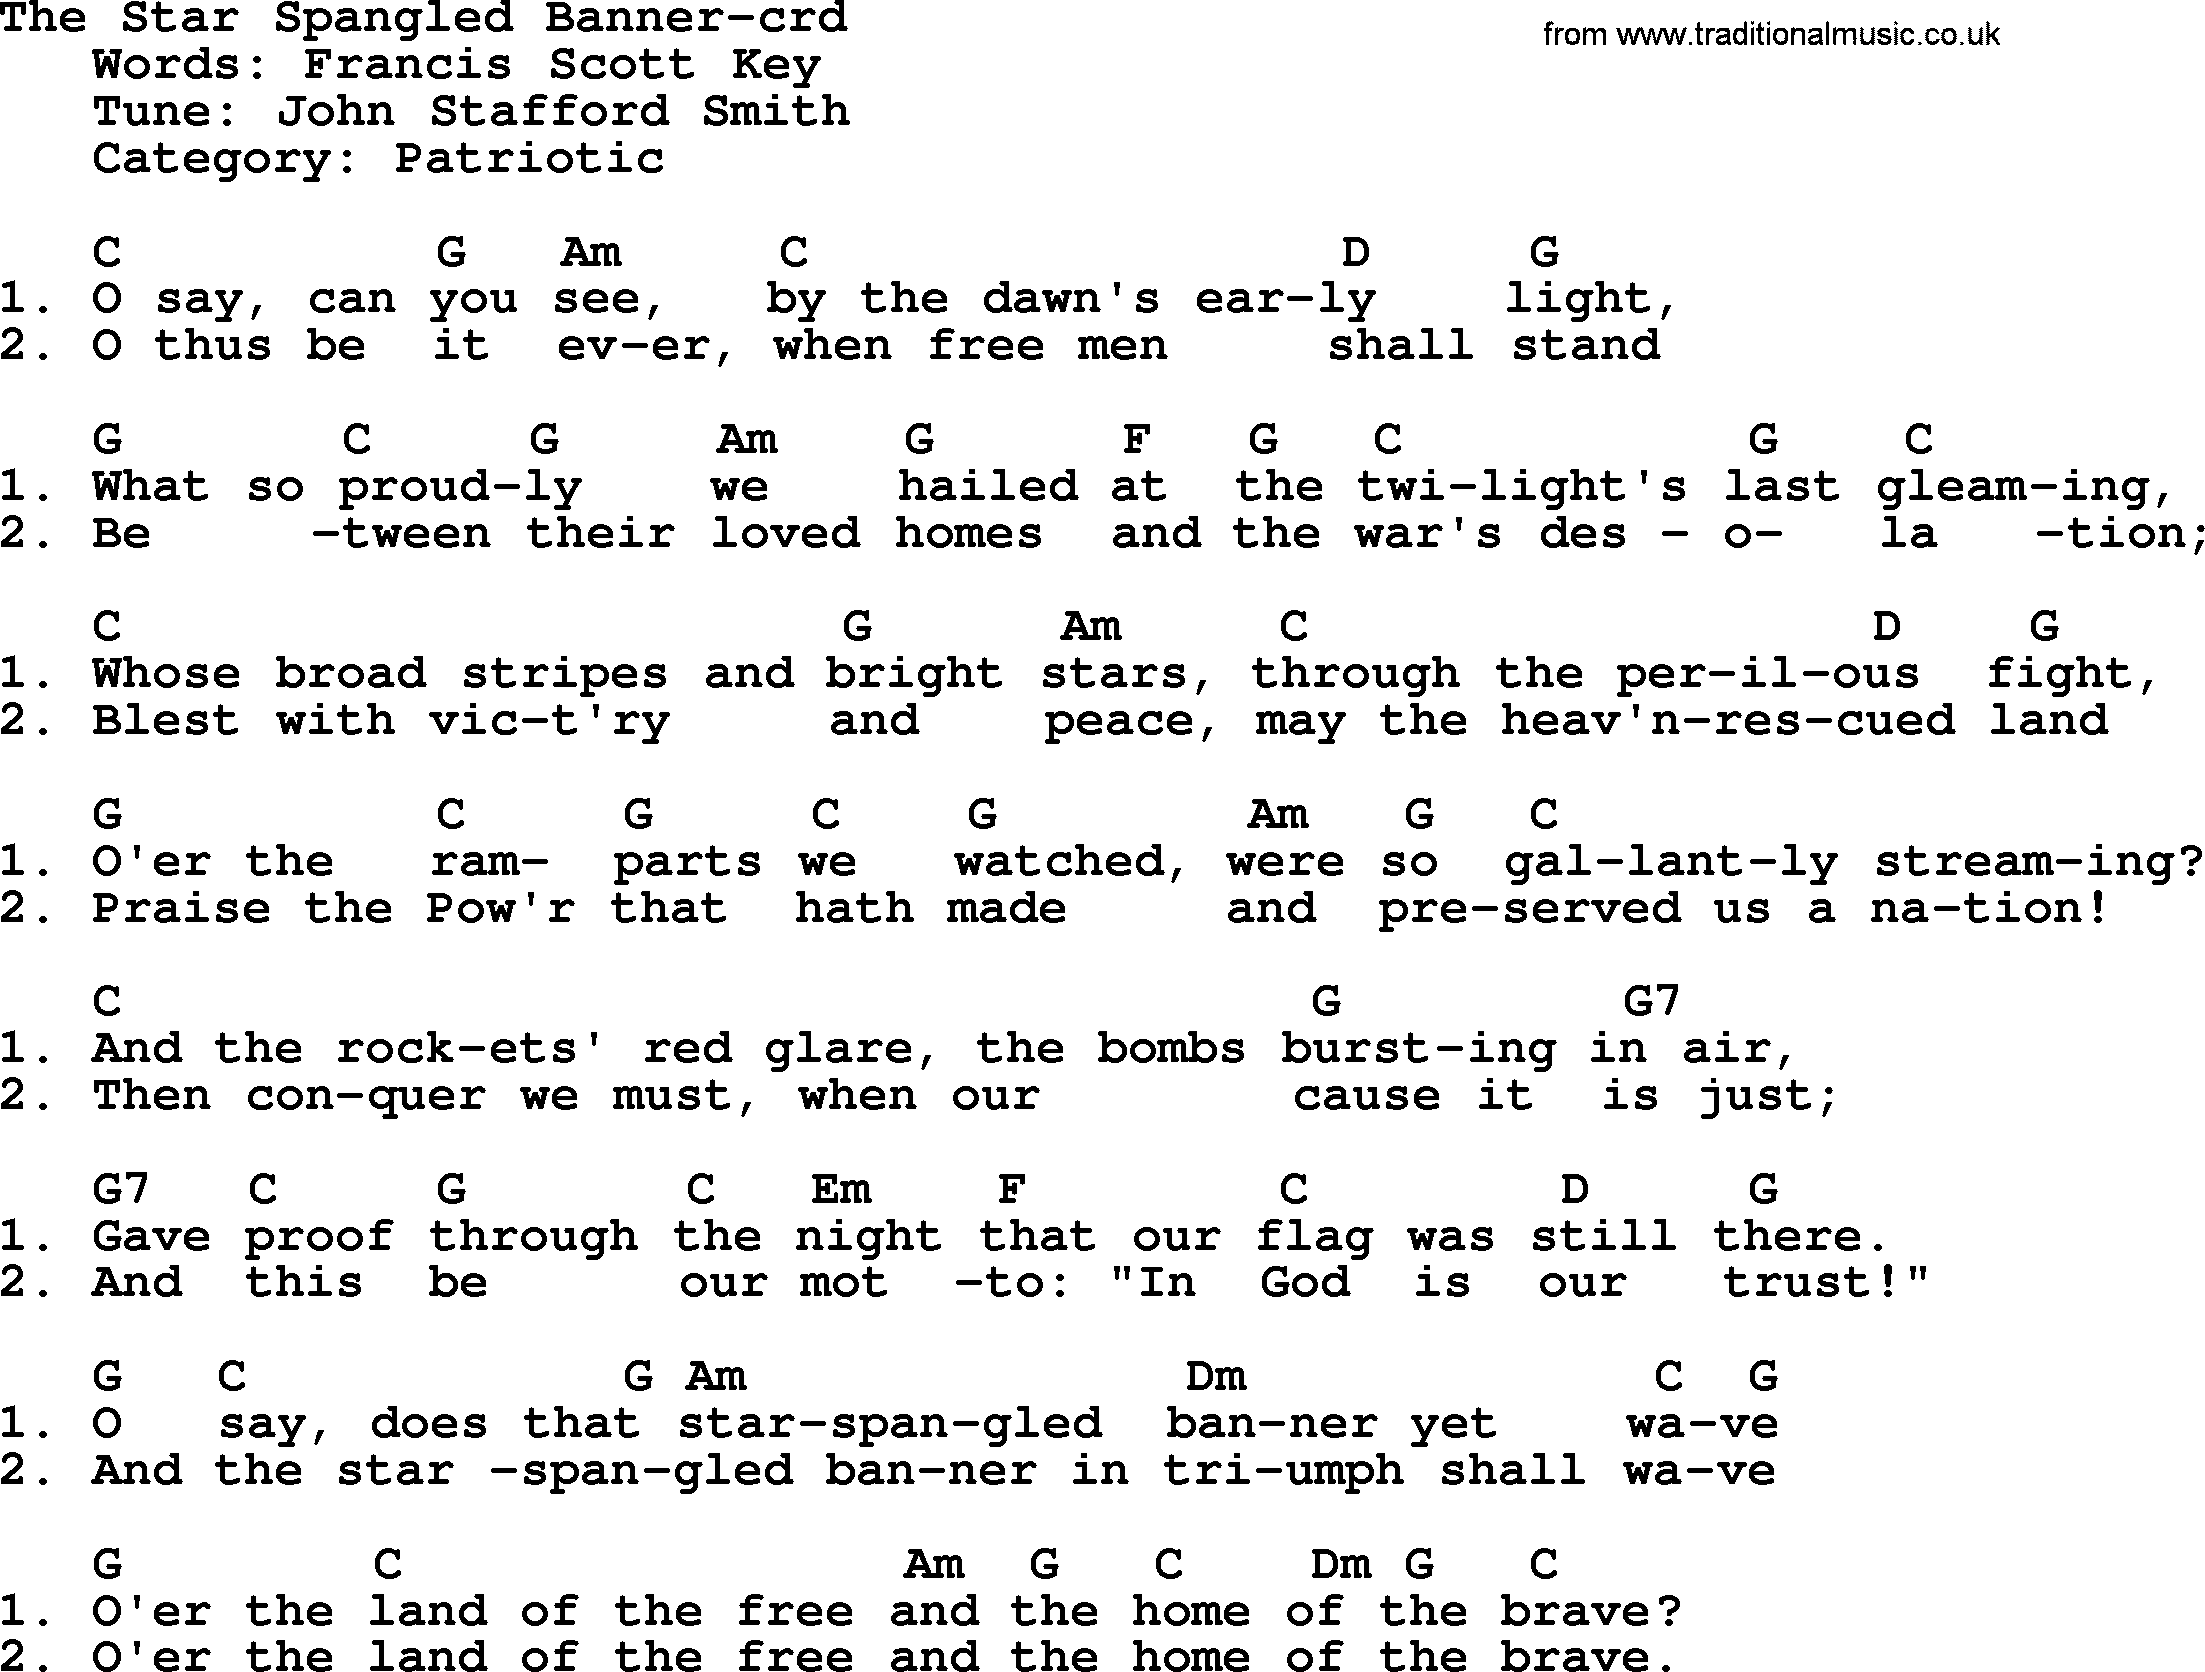 Top 500 Hymn: The Star Spangled Banner, lyrics and chords